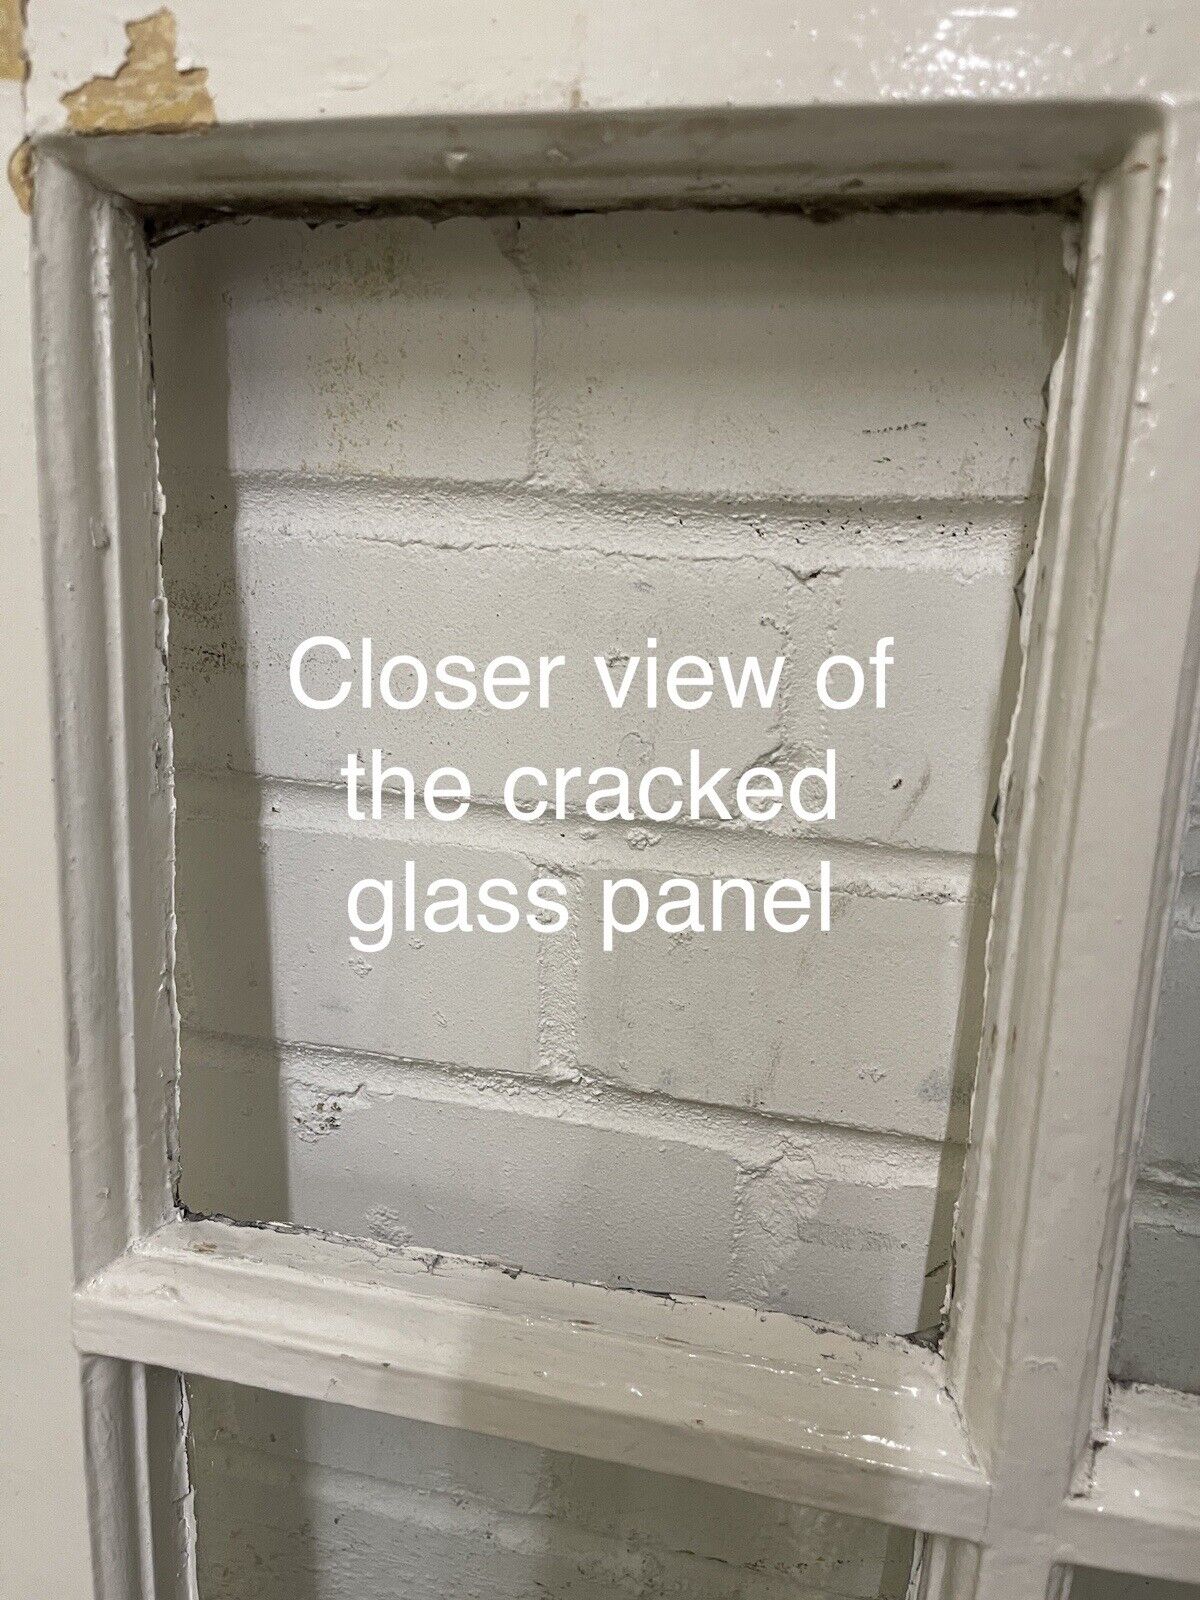 Reclaimed Old Georgian 4 Panel Wooden Window 495 x 585mm